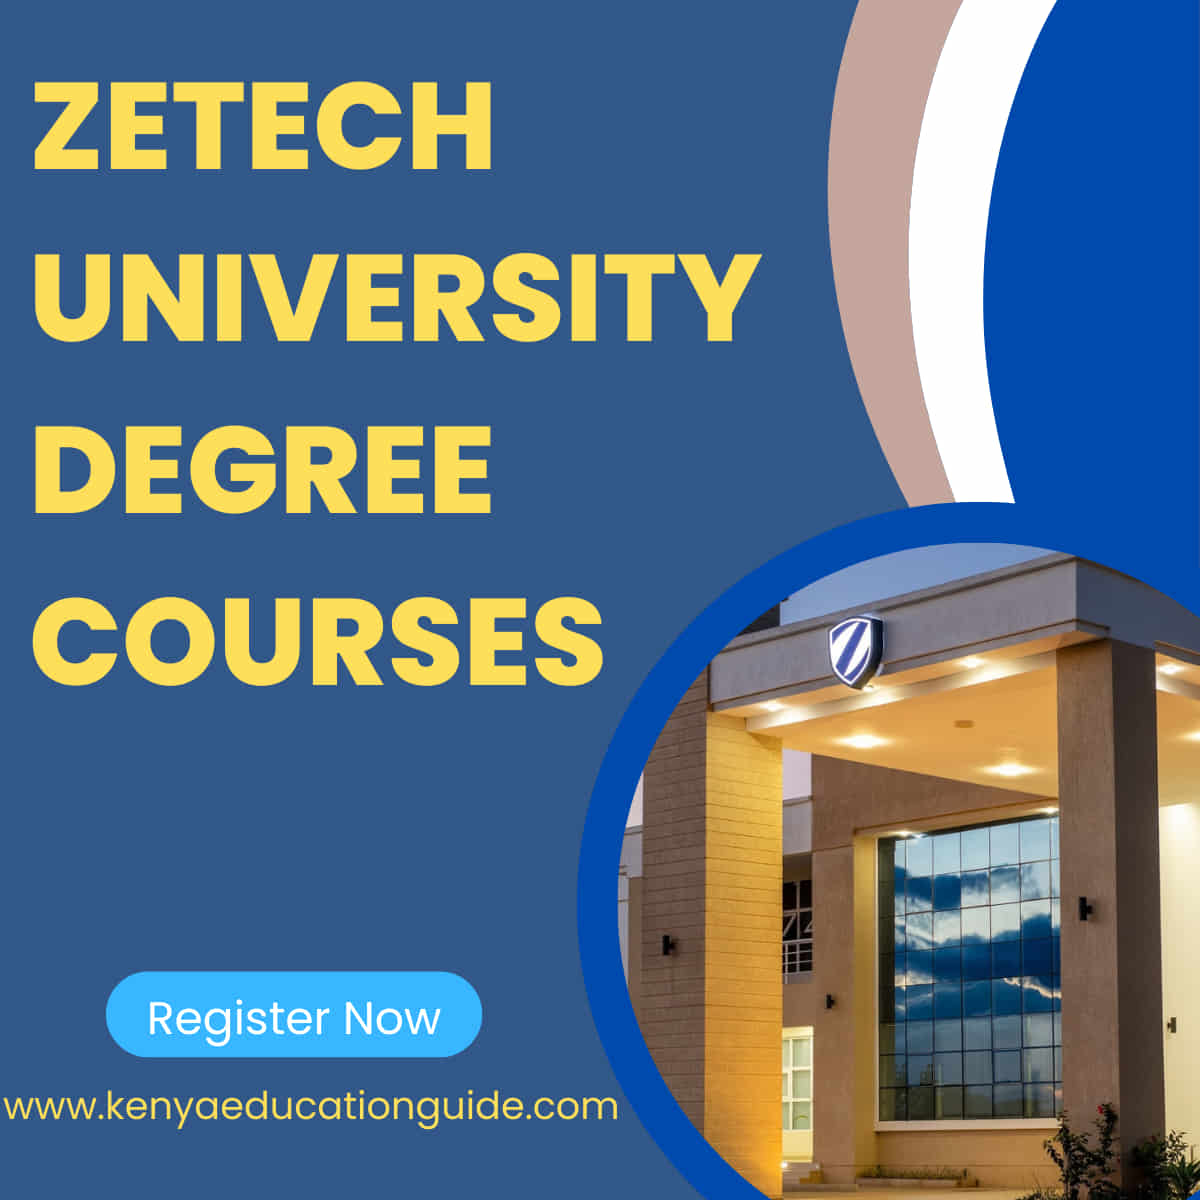 Zetech University degree courses